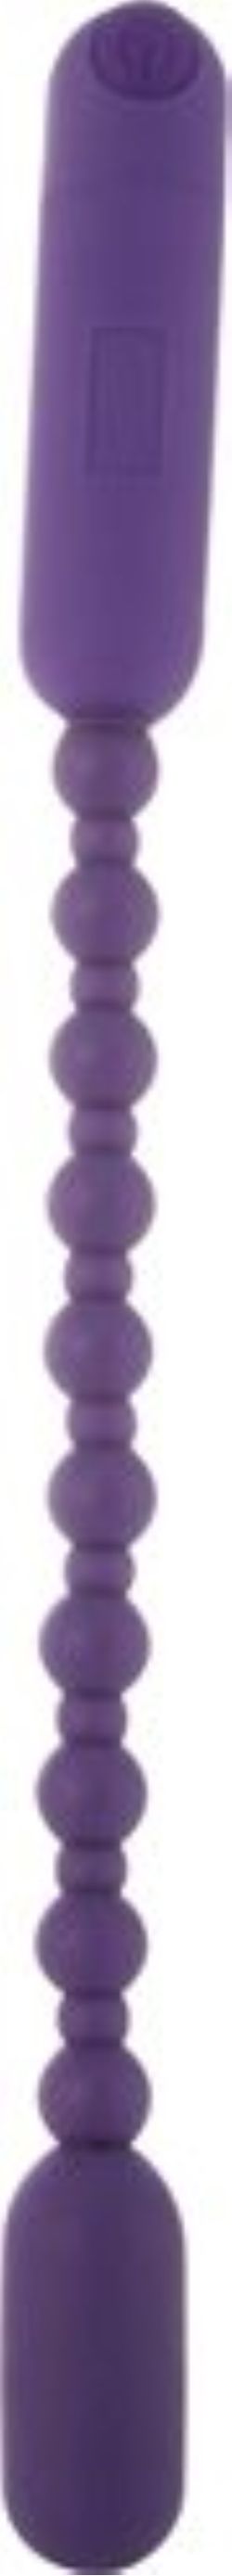 Bolas anales vibradoras Booty Beads - Violetas